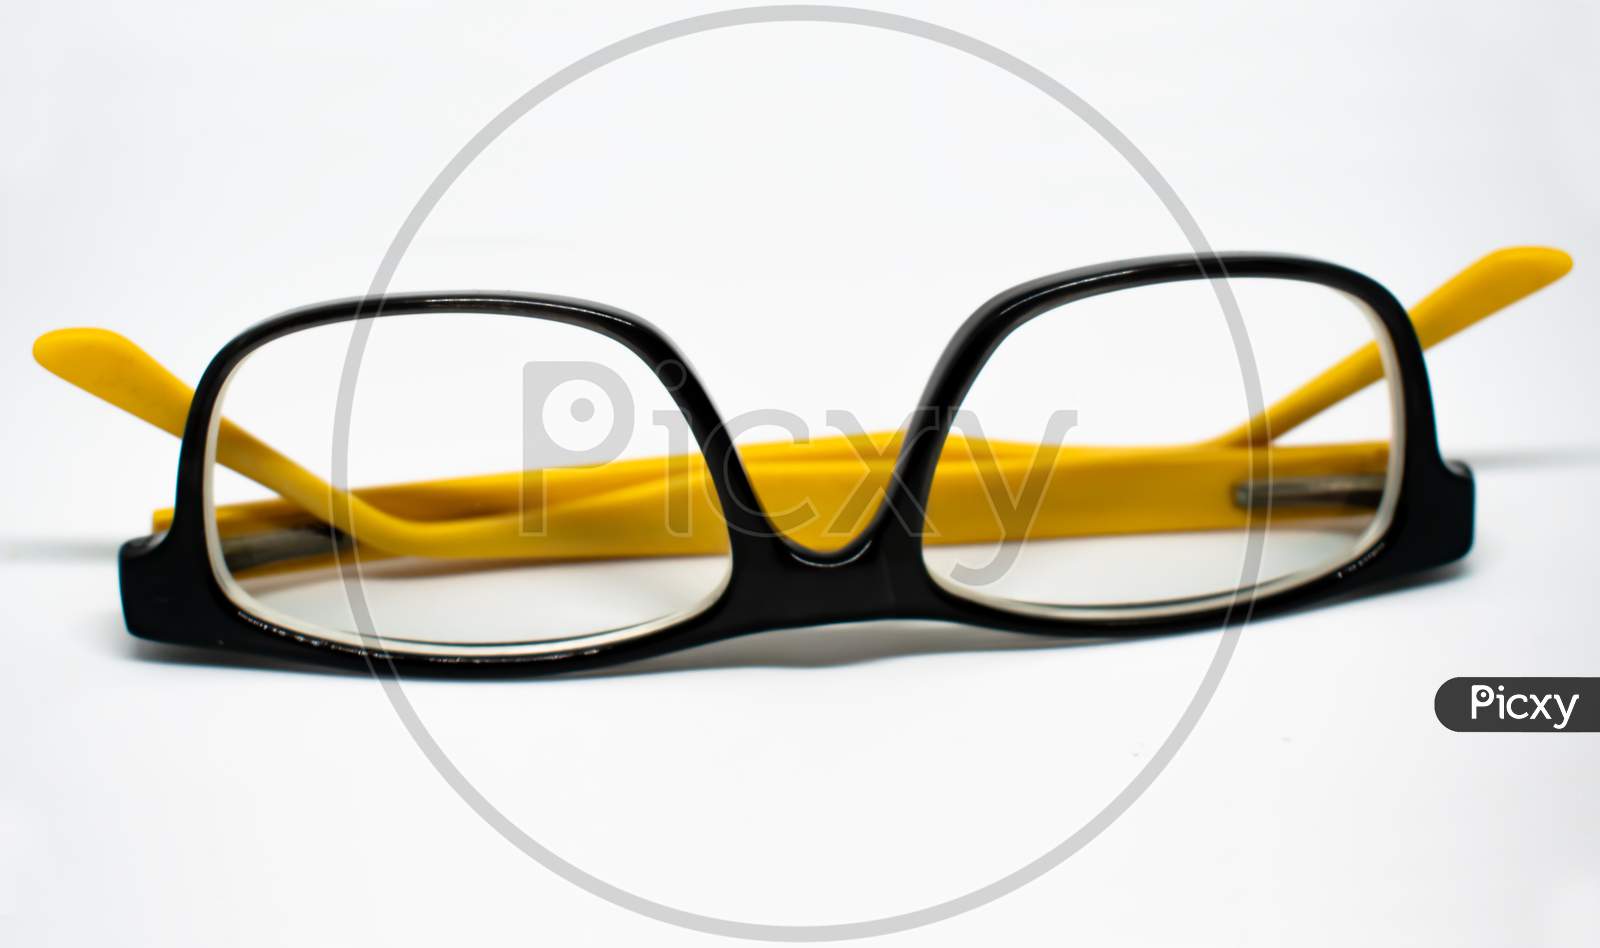 Fashionable modern eye glass isolated on white background